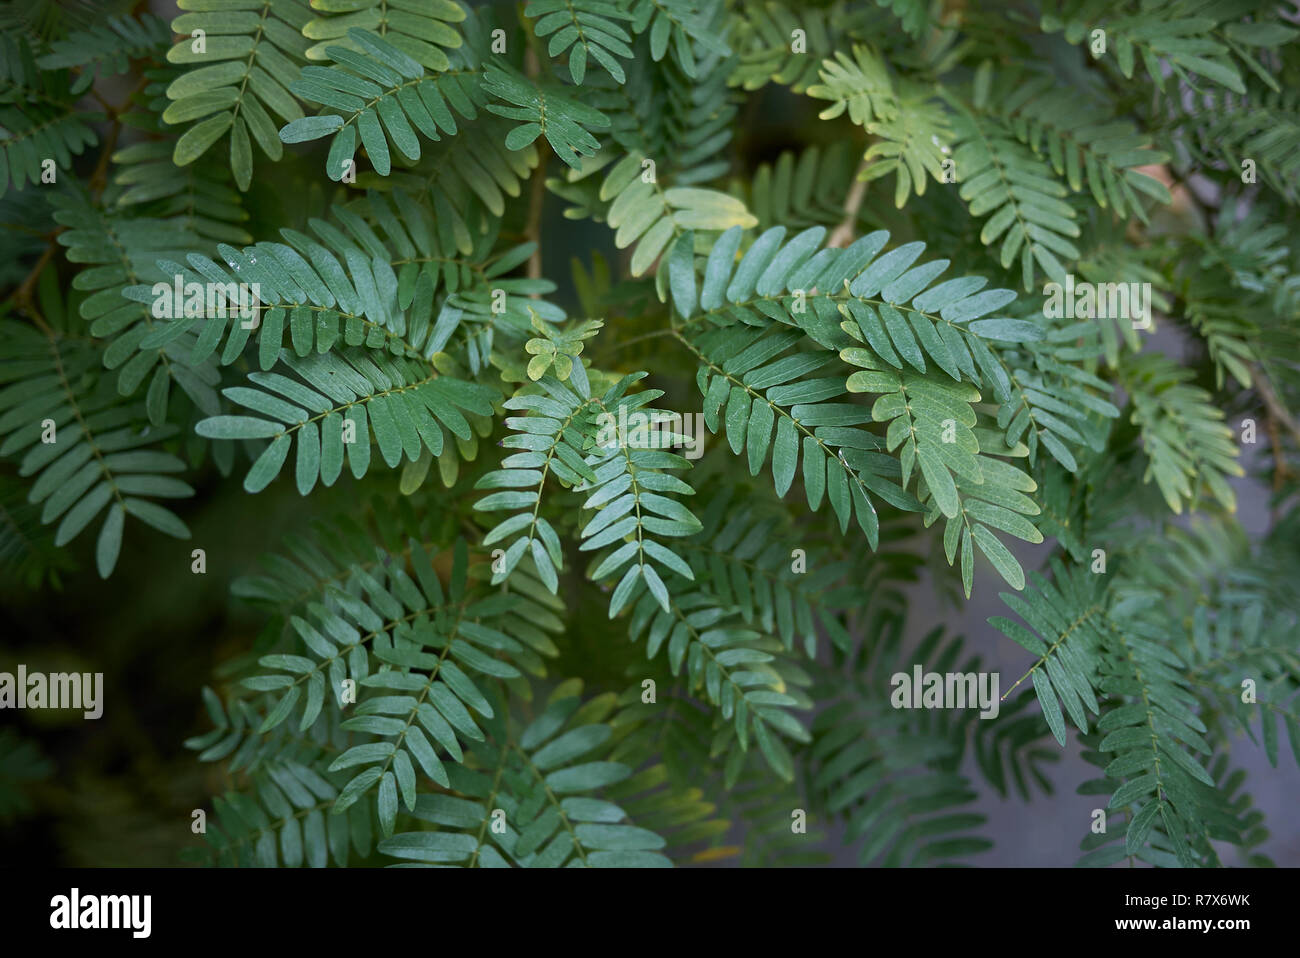 Calliandra surinamensis green foliage Stock Photo